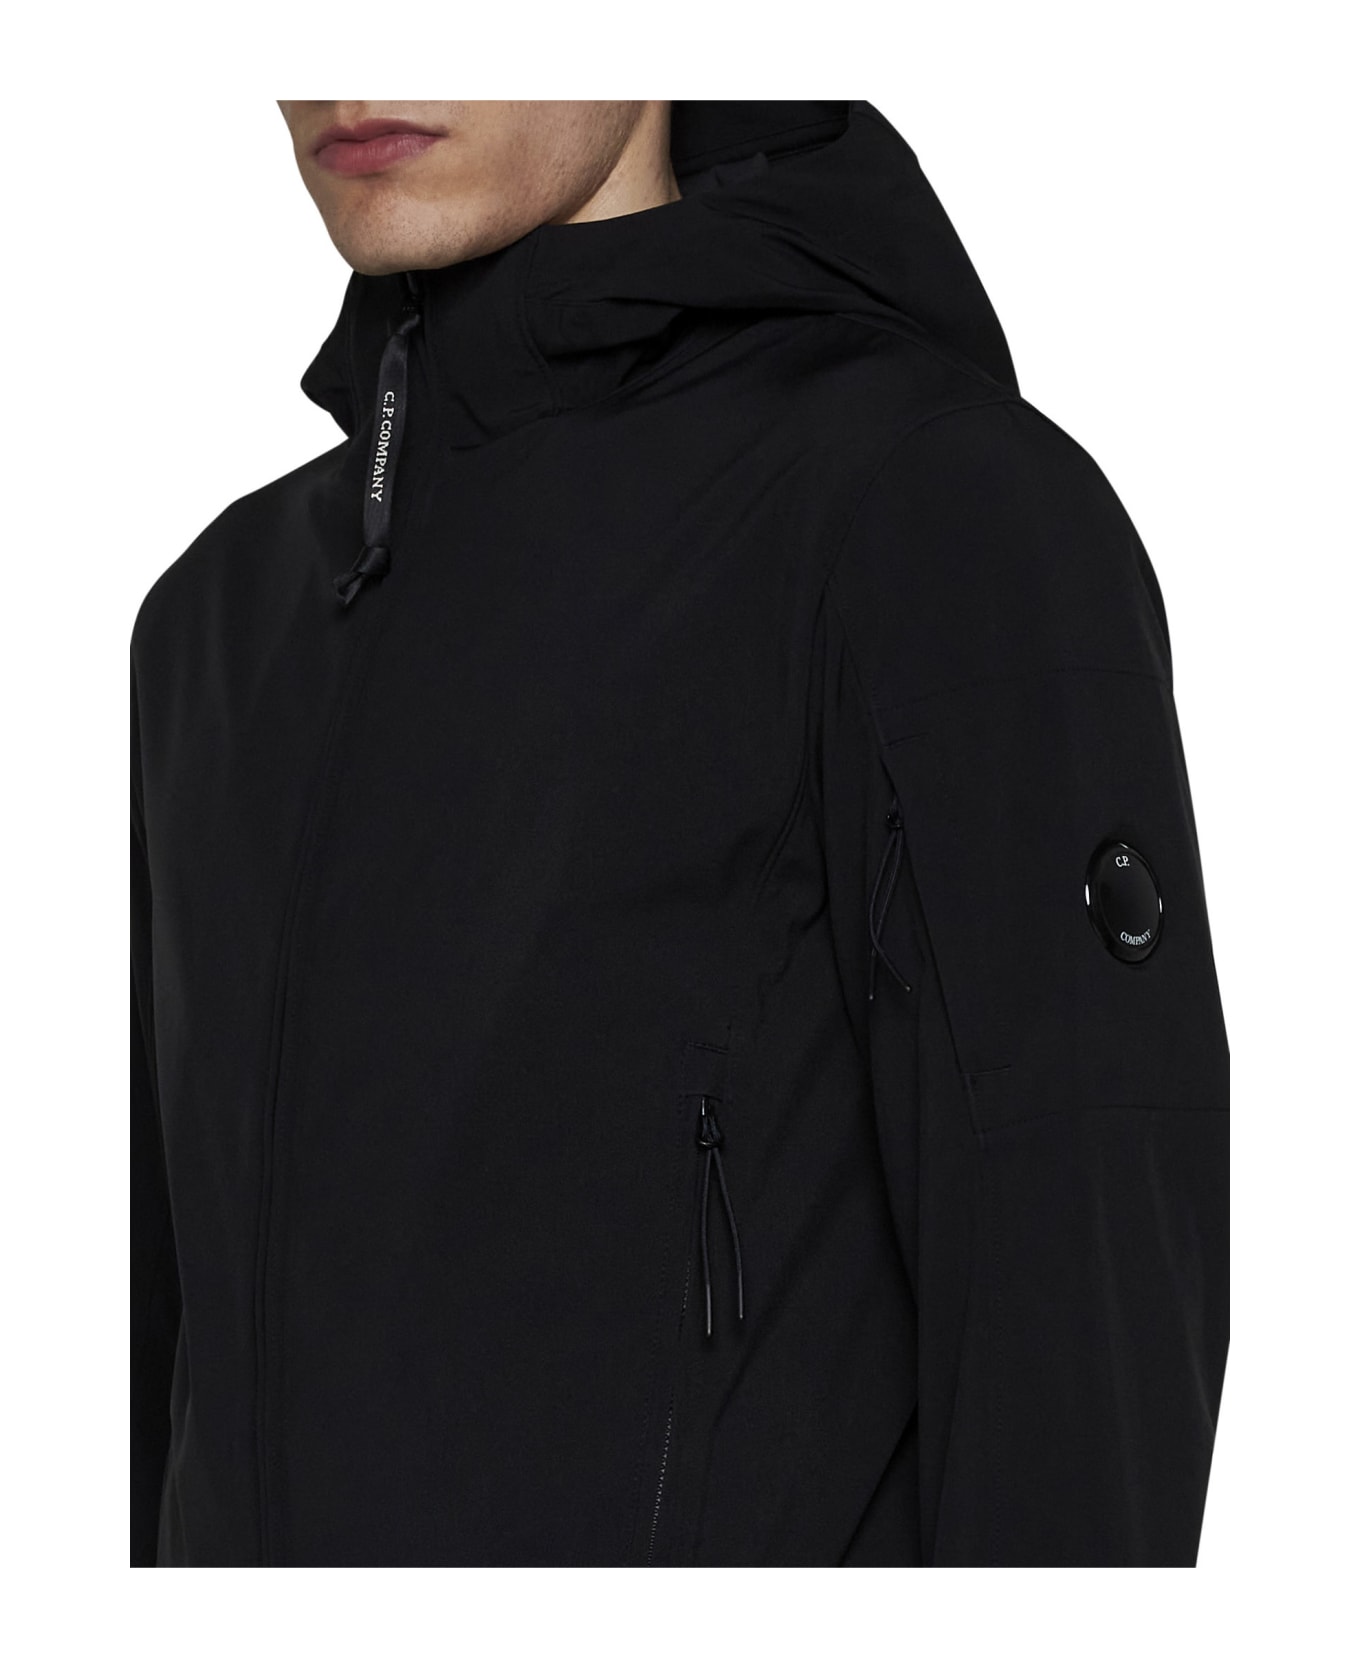 C.P. Company 'outerwear' Jacket - BLACK